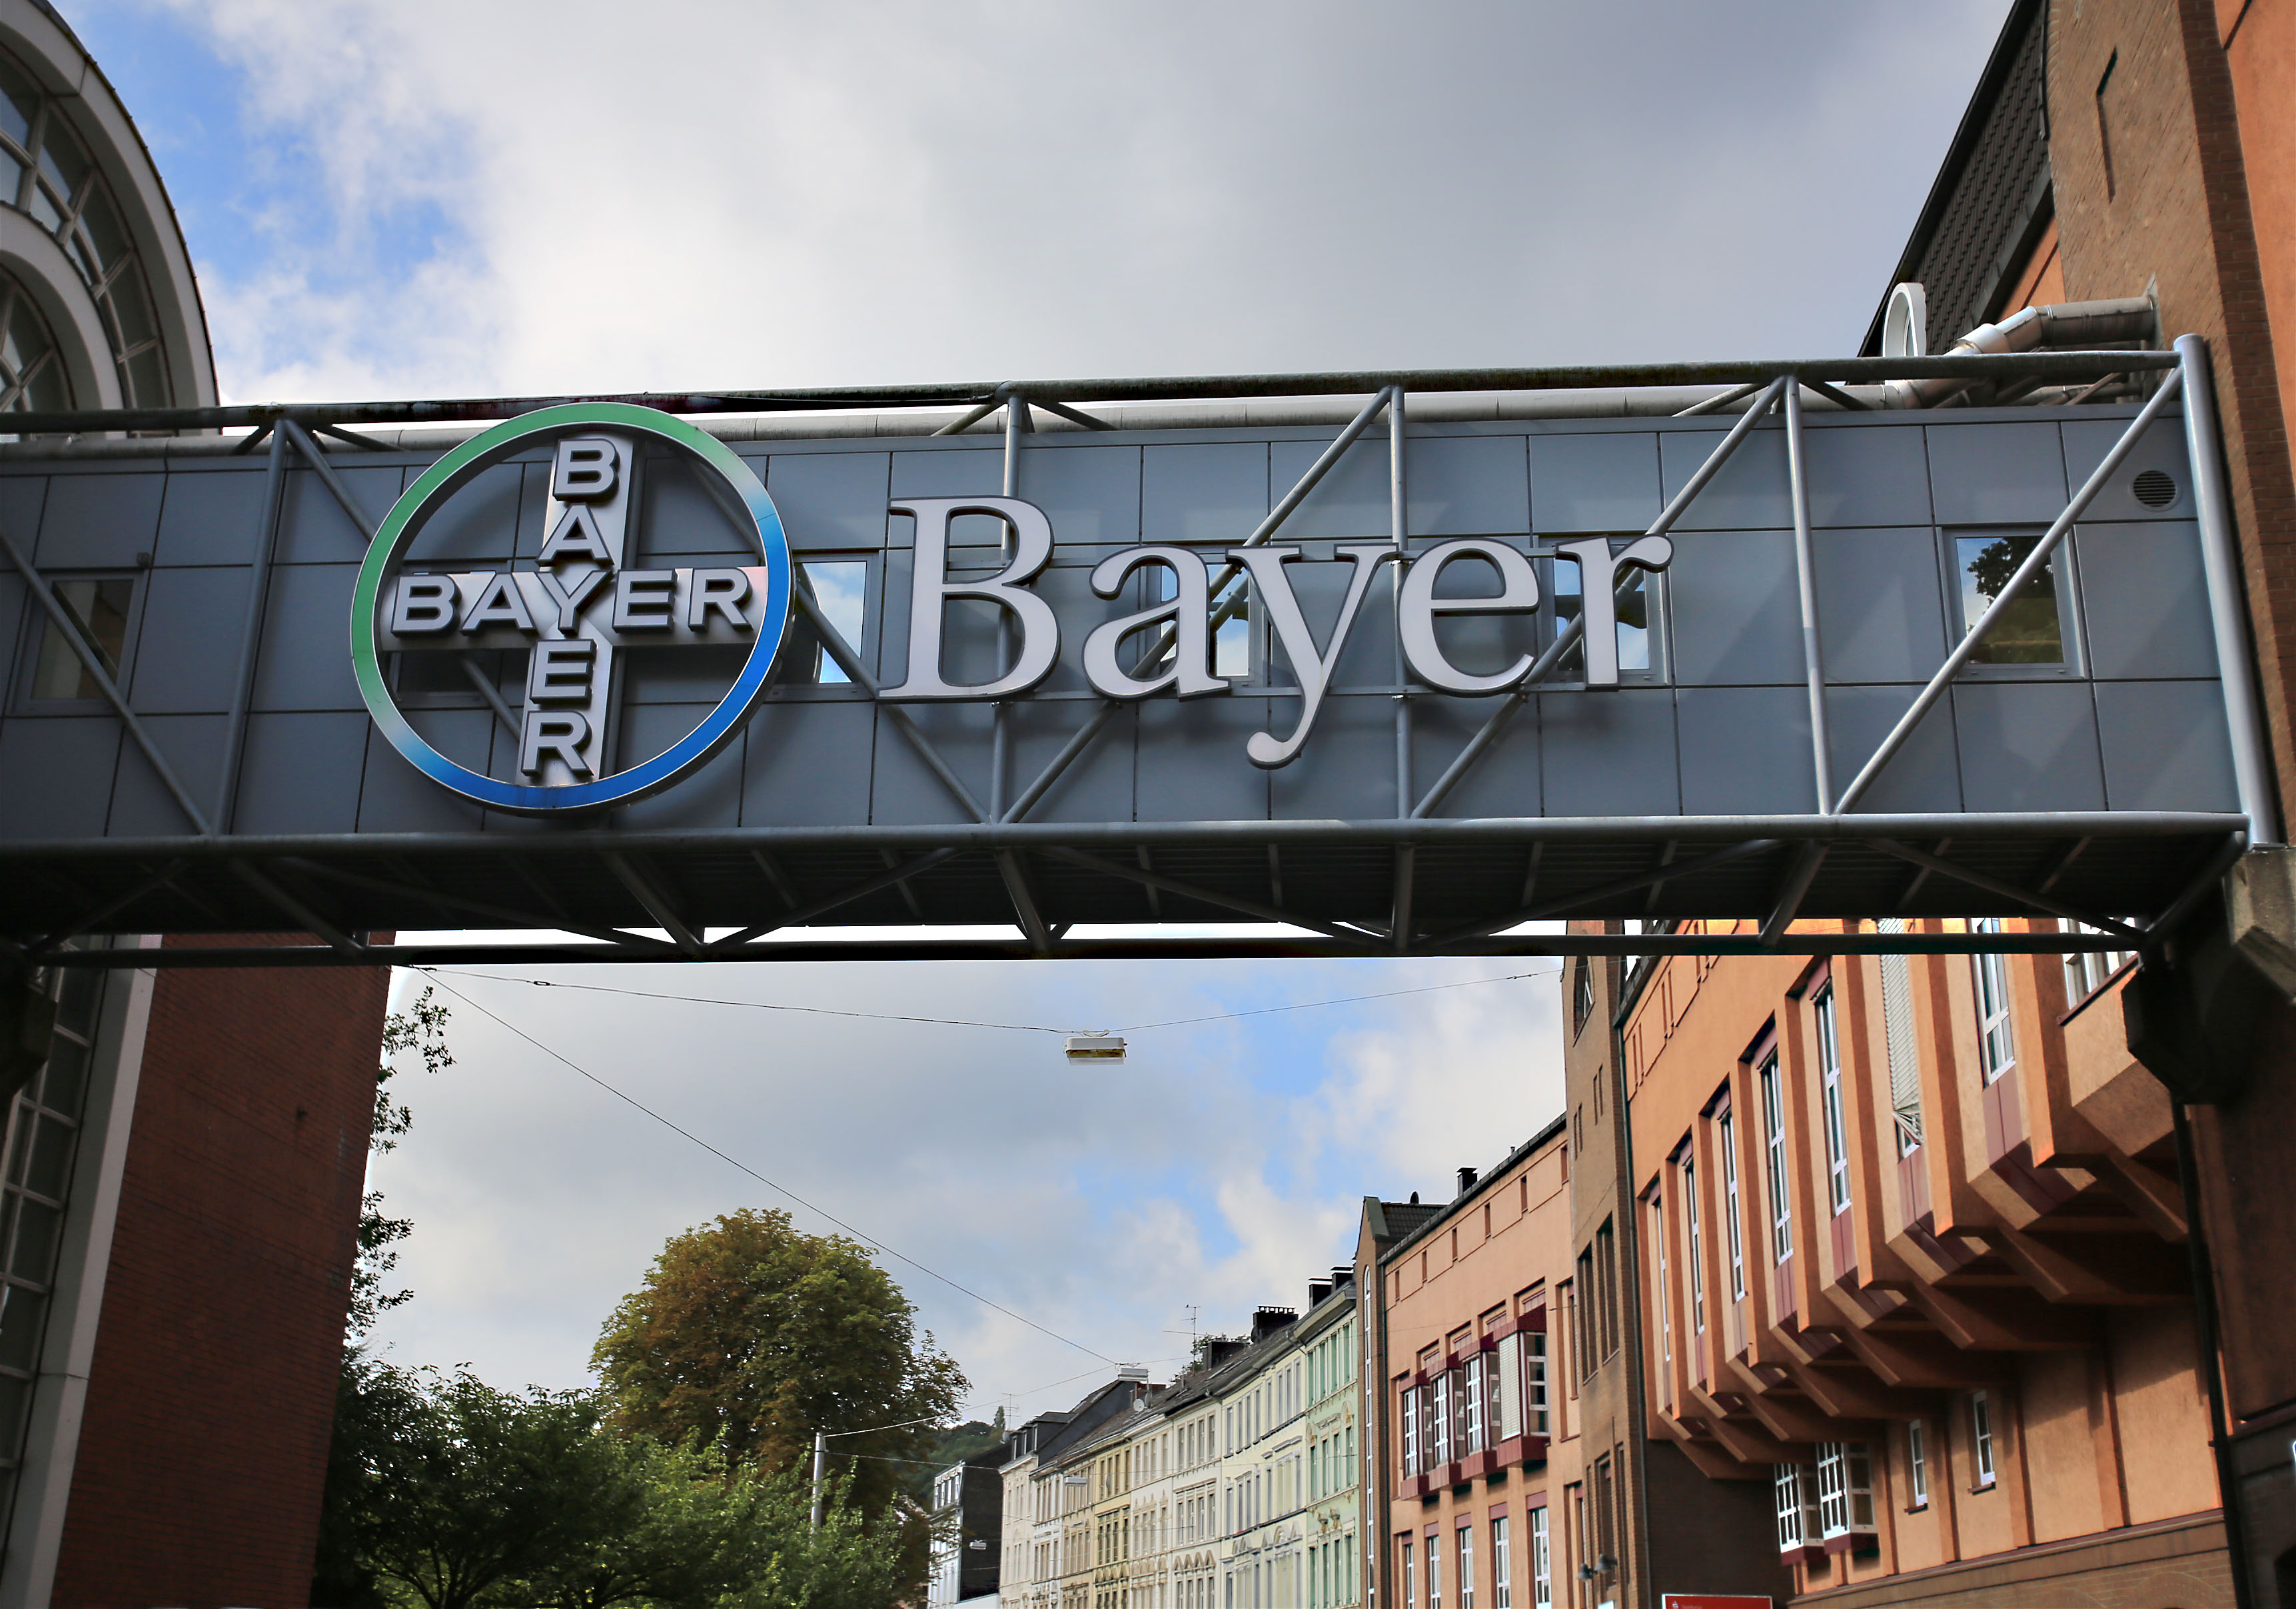  -.     Bayer   